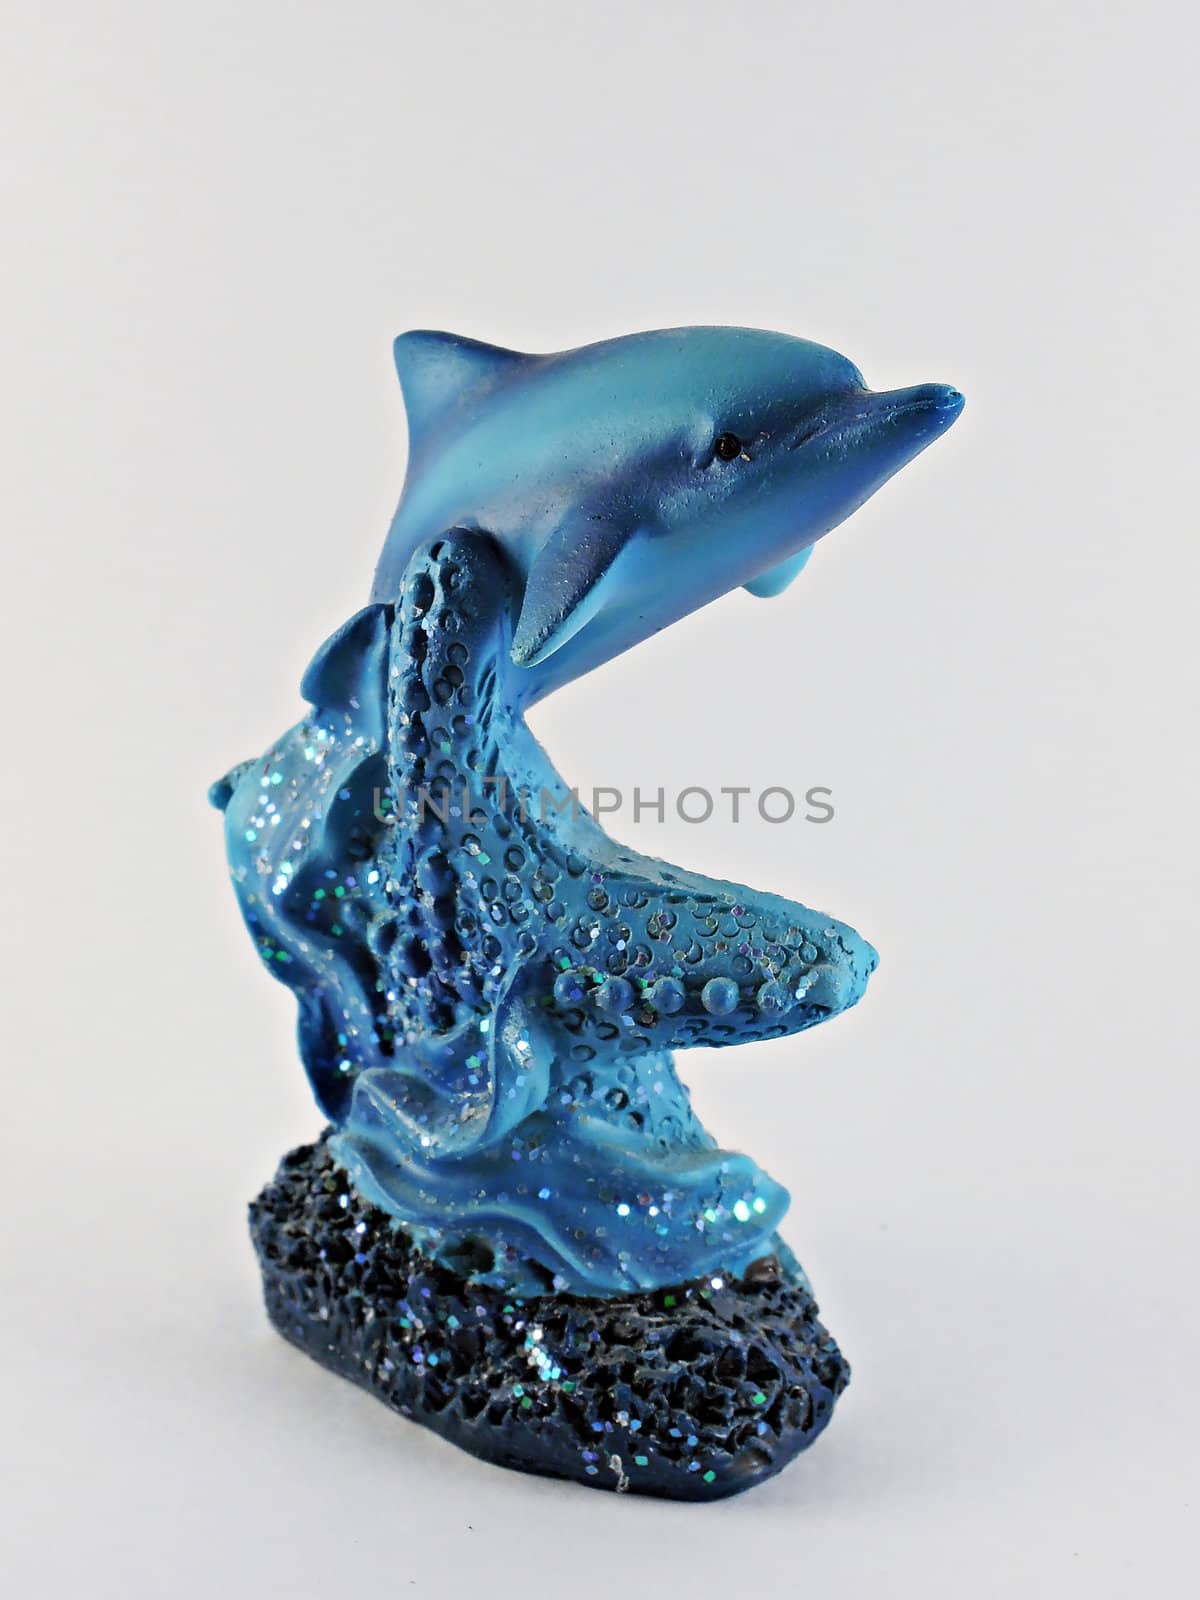 Toy dolphin by Picnichok